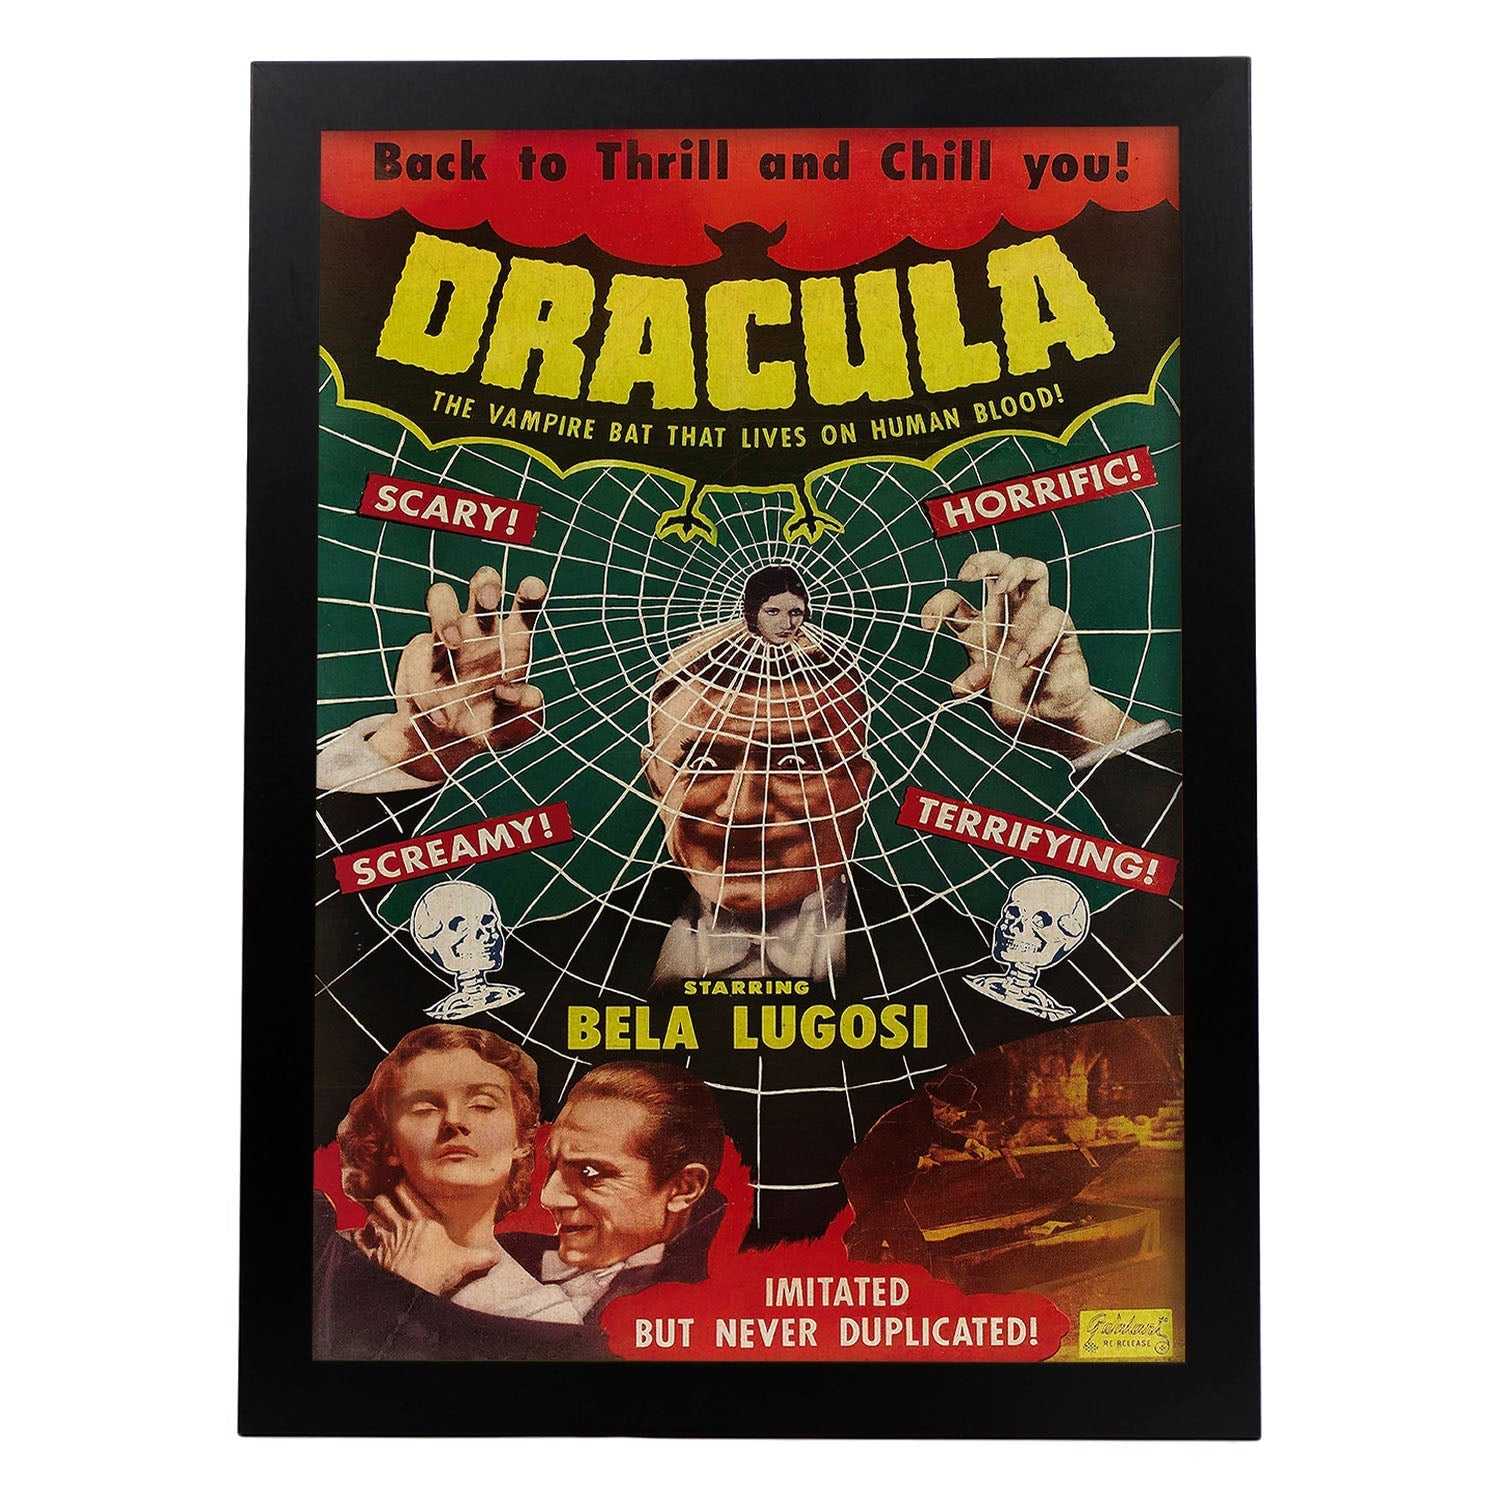 Poster vintage. Cartel cine vintage "Dracula".-Artwork-Nacnic-A4-Marco Negro-Nacnic Estudio SL